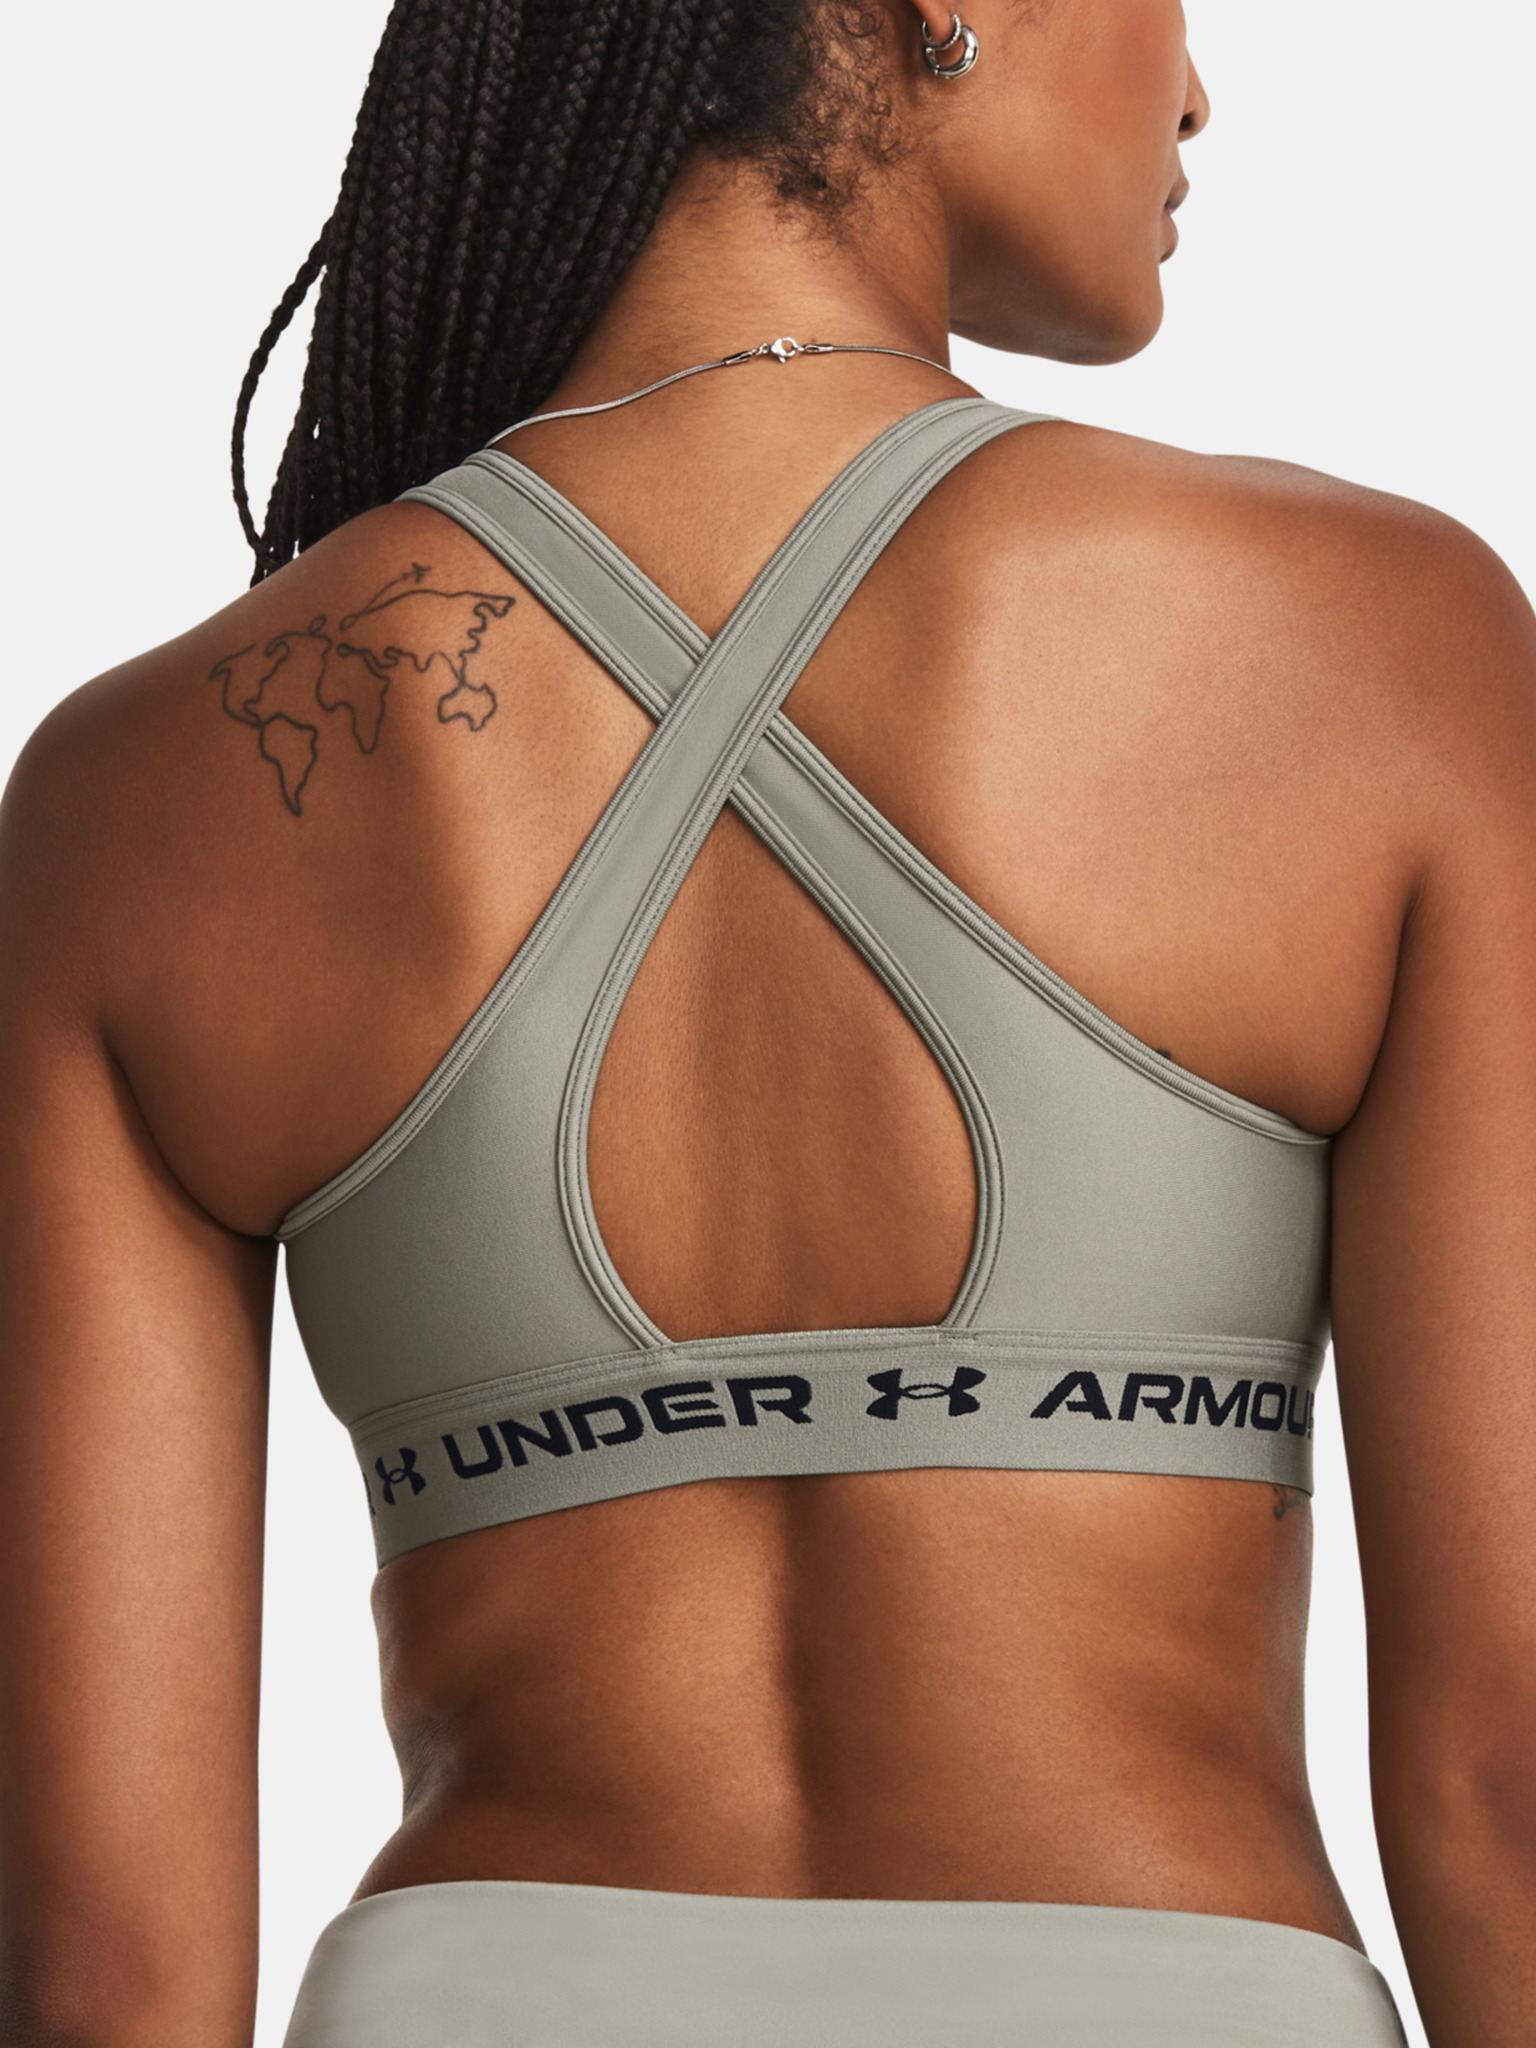 Under Armour Women's Mid Crossback Metallic Print Sports Bra, Bras, Clothing & Accessories